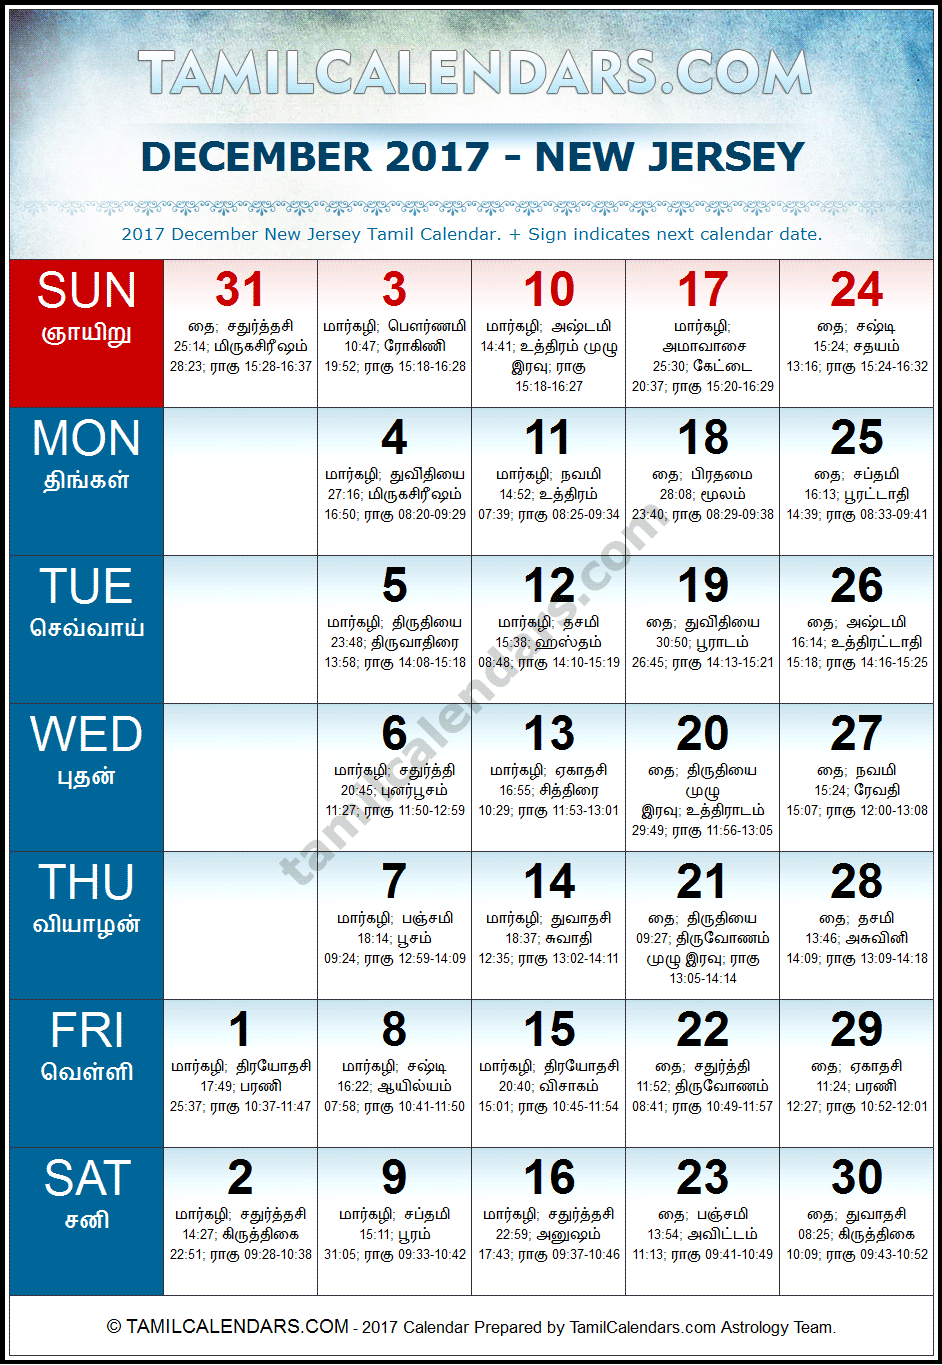 December 2017 Tamil Calendar for New Jersey, USA